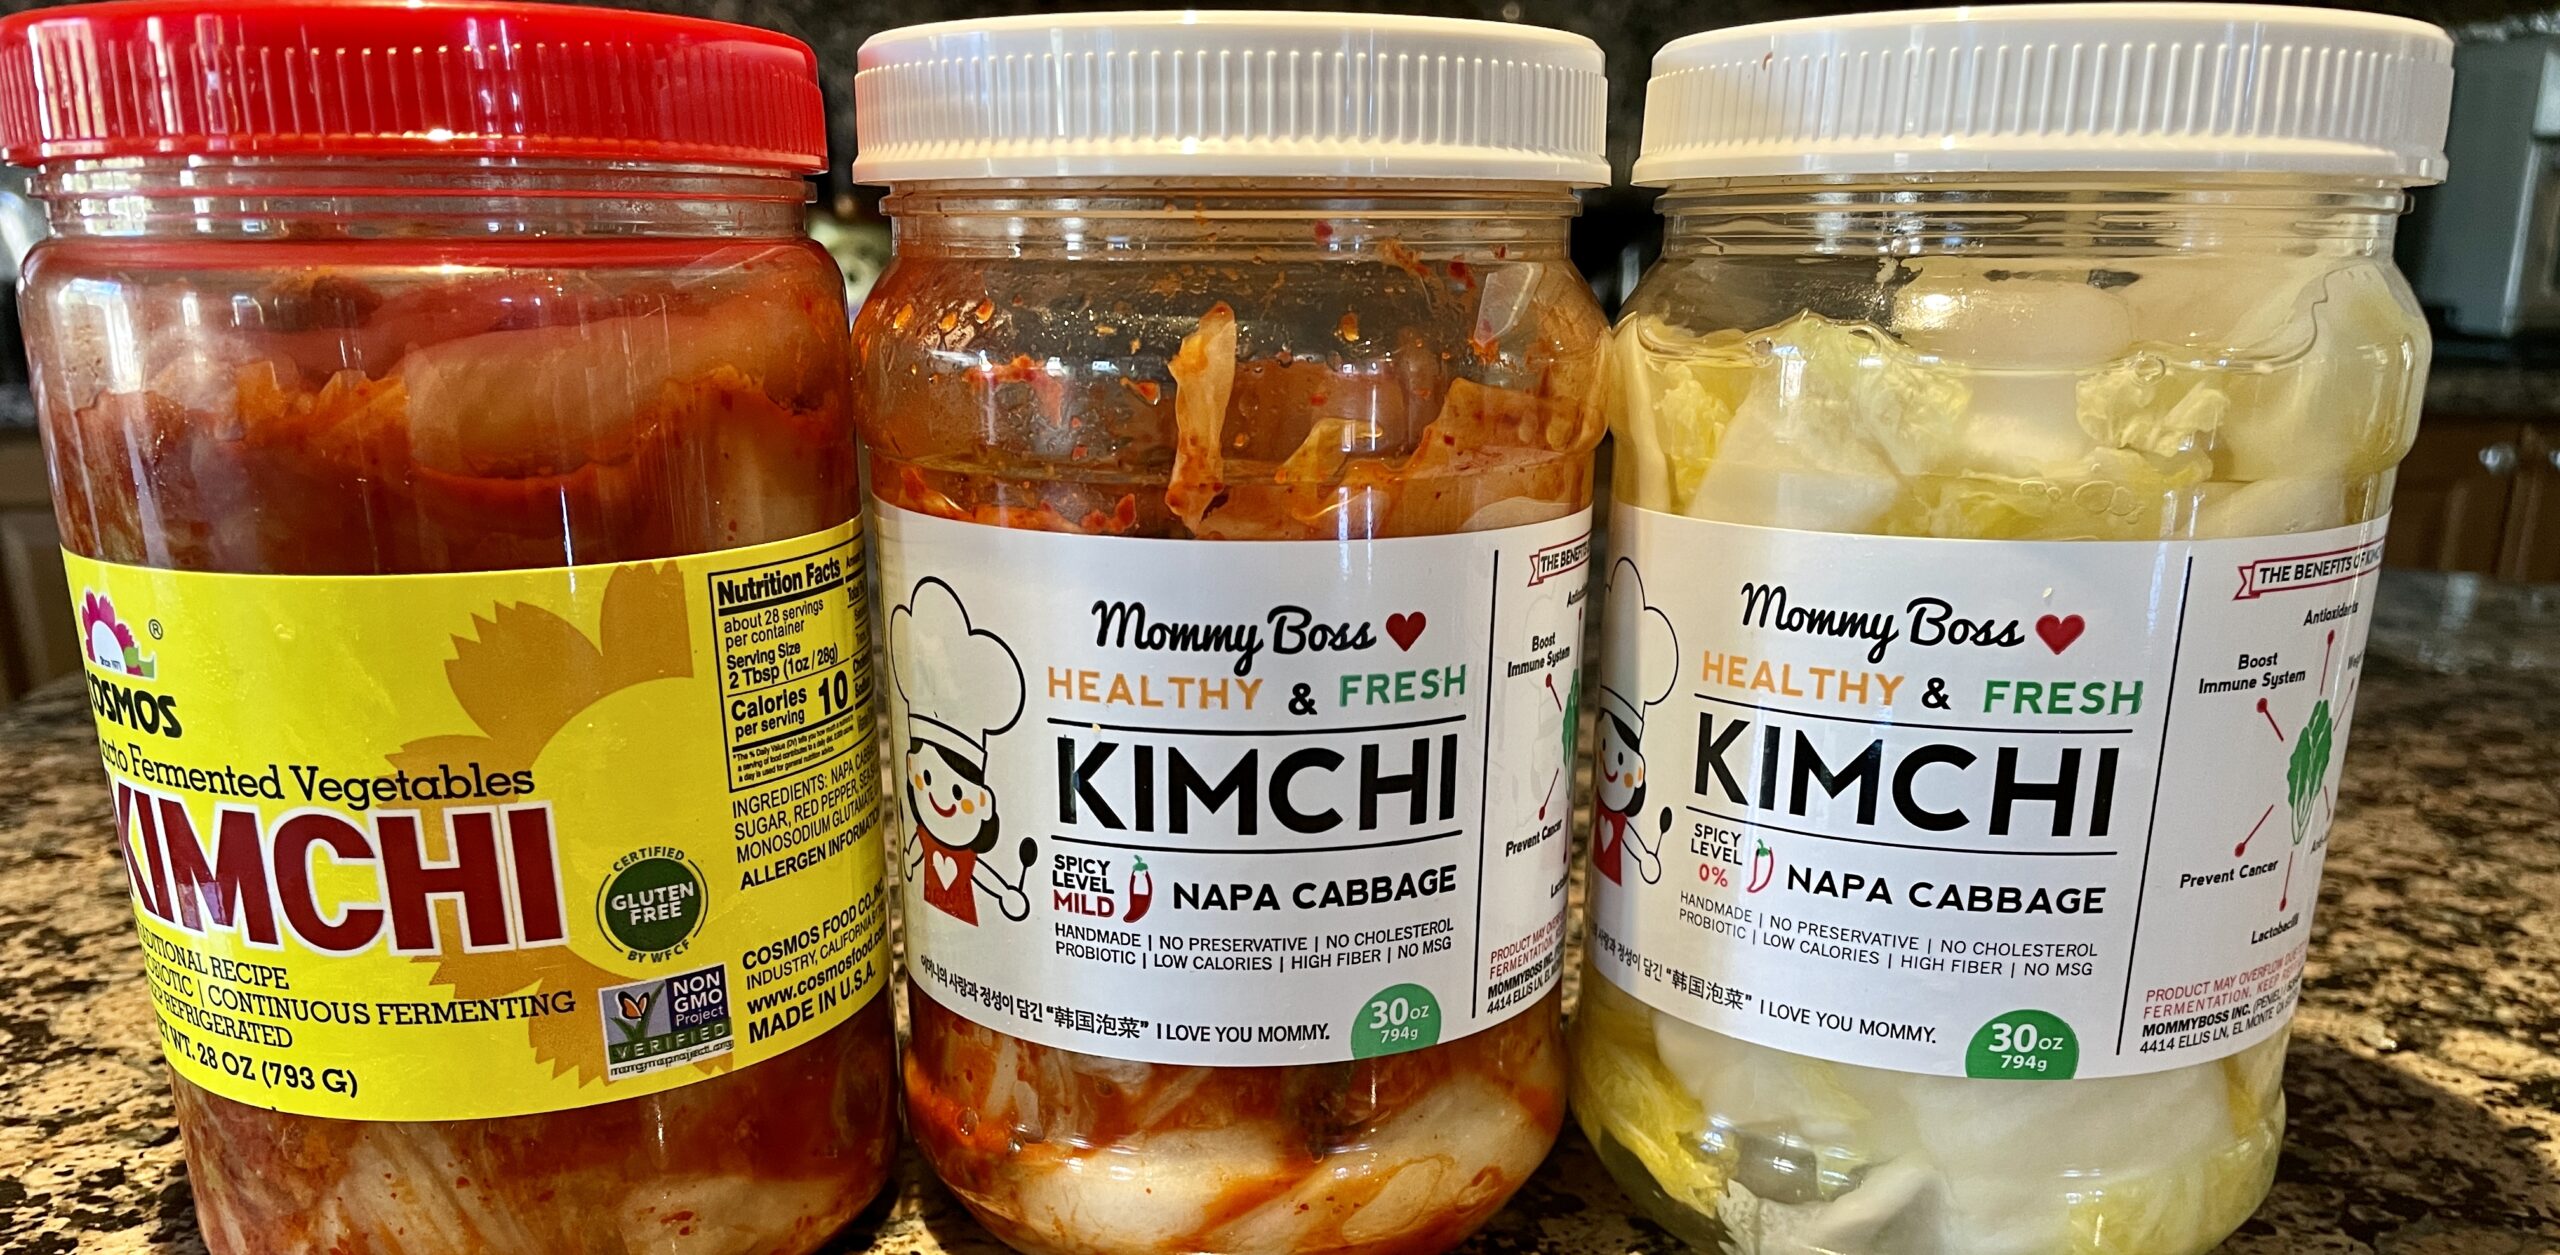 3 kinds of kimchi in jars